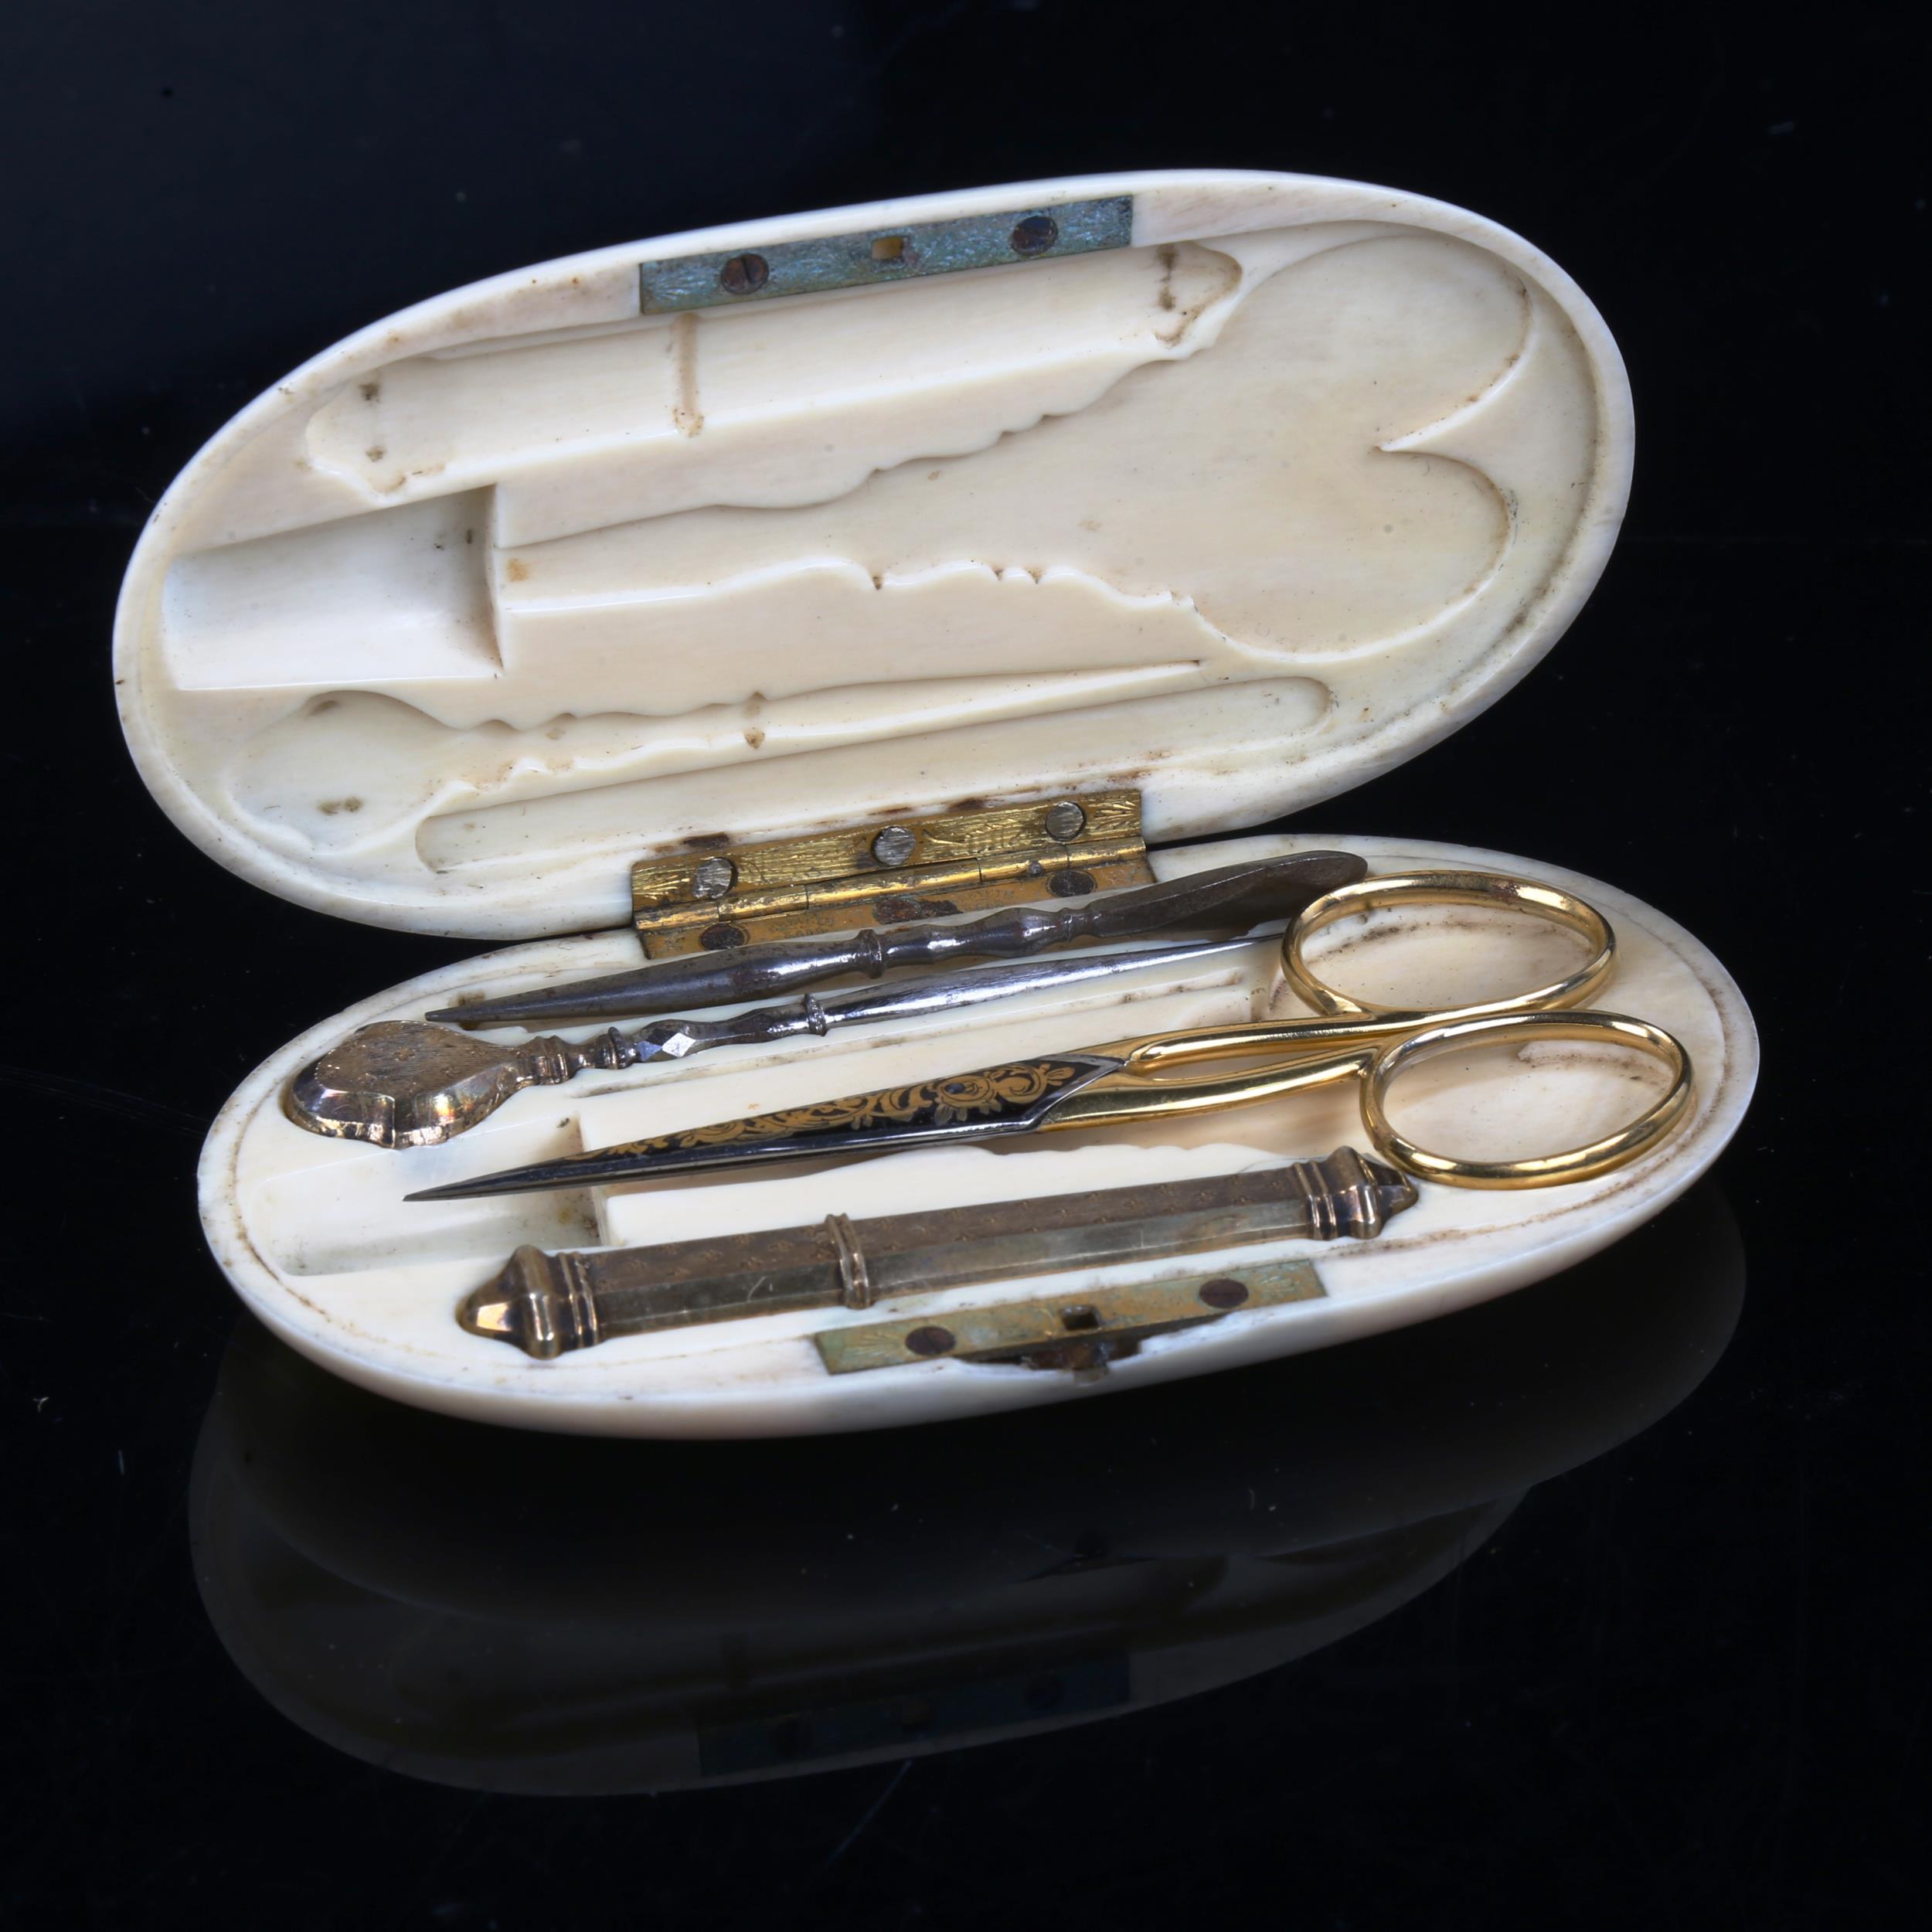 A 19th century ivory sewing etui, containing gilded scissors, needle case etc, case length 11cm